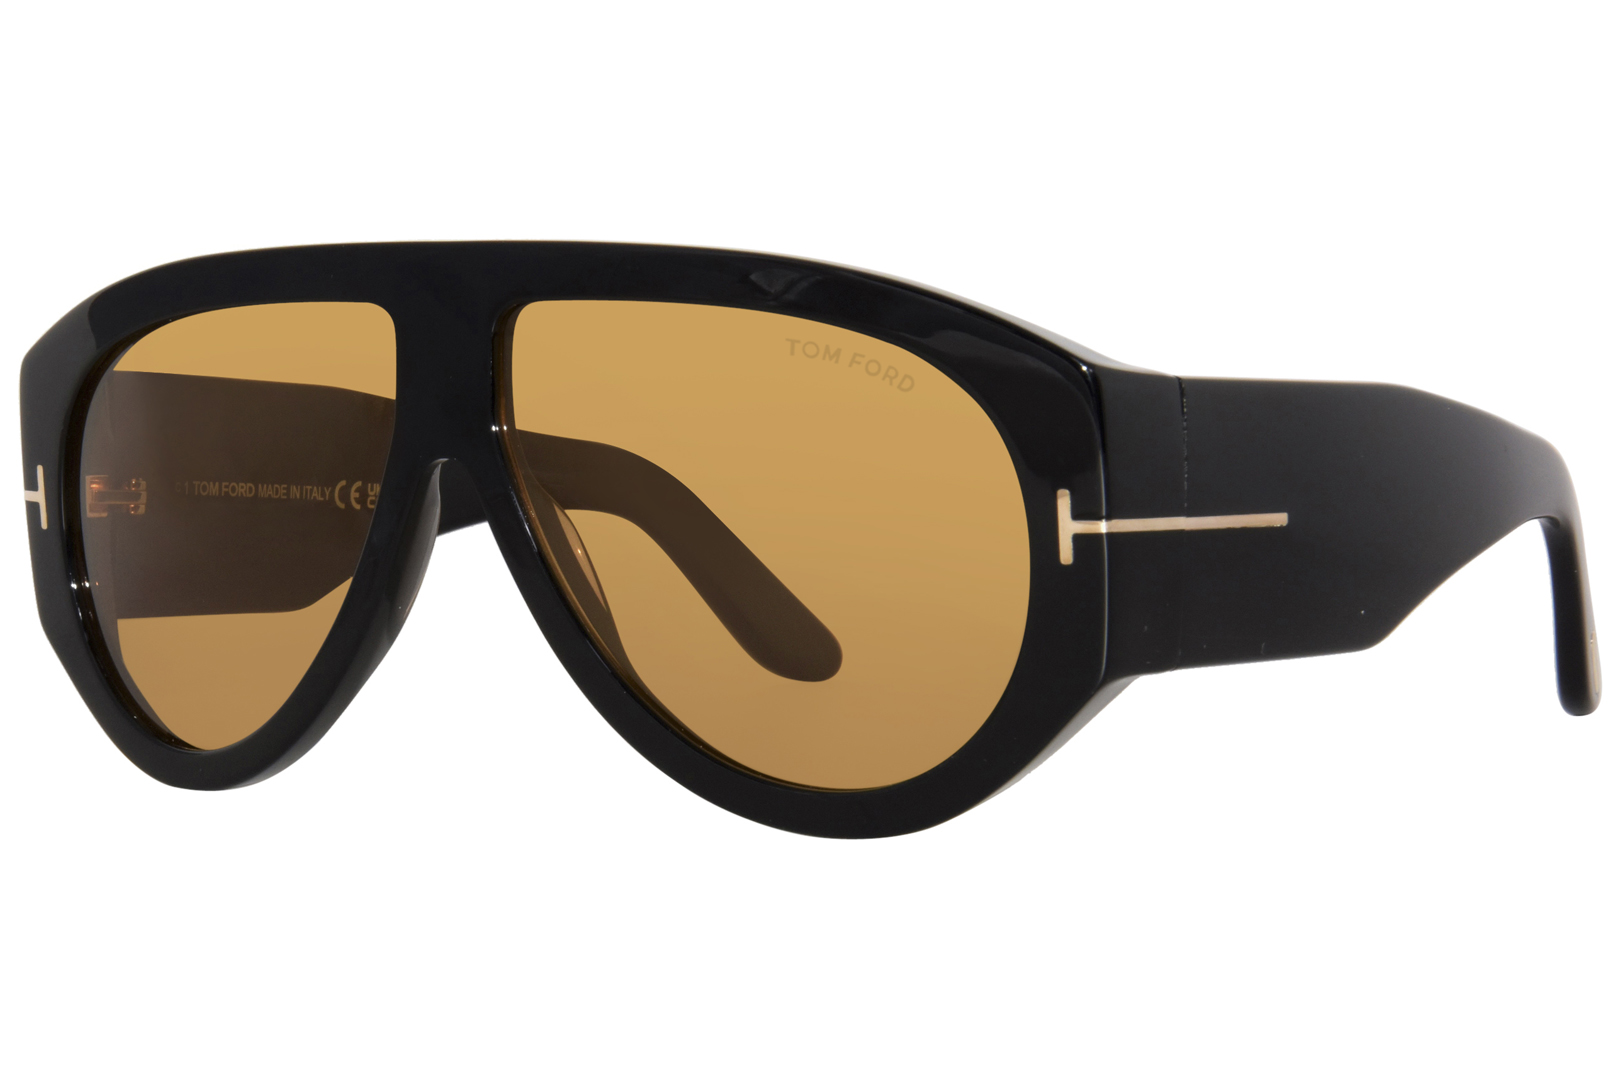 Bronson Aviator Sunglasses in Black - Tom Ford